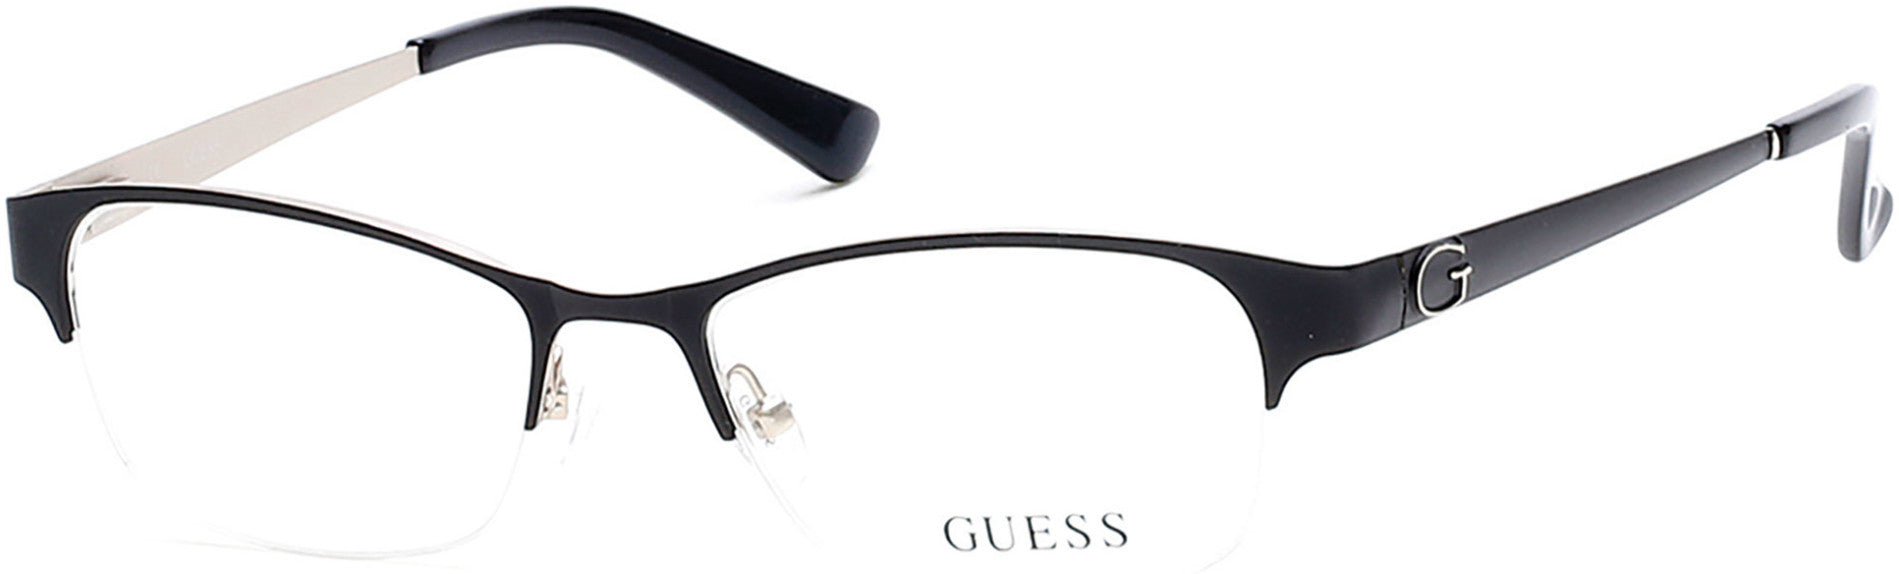 Guess GU2567 Round Eyeglasses 005-005 - Black/other